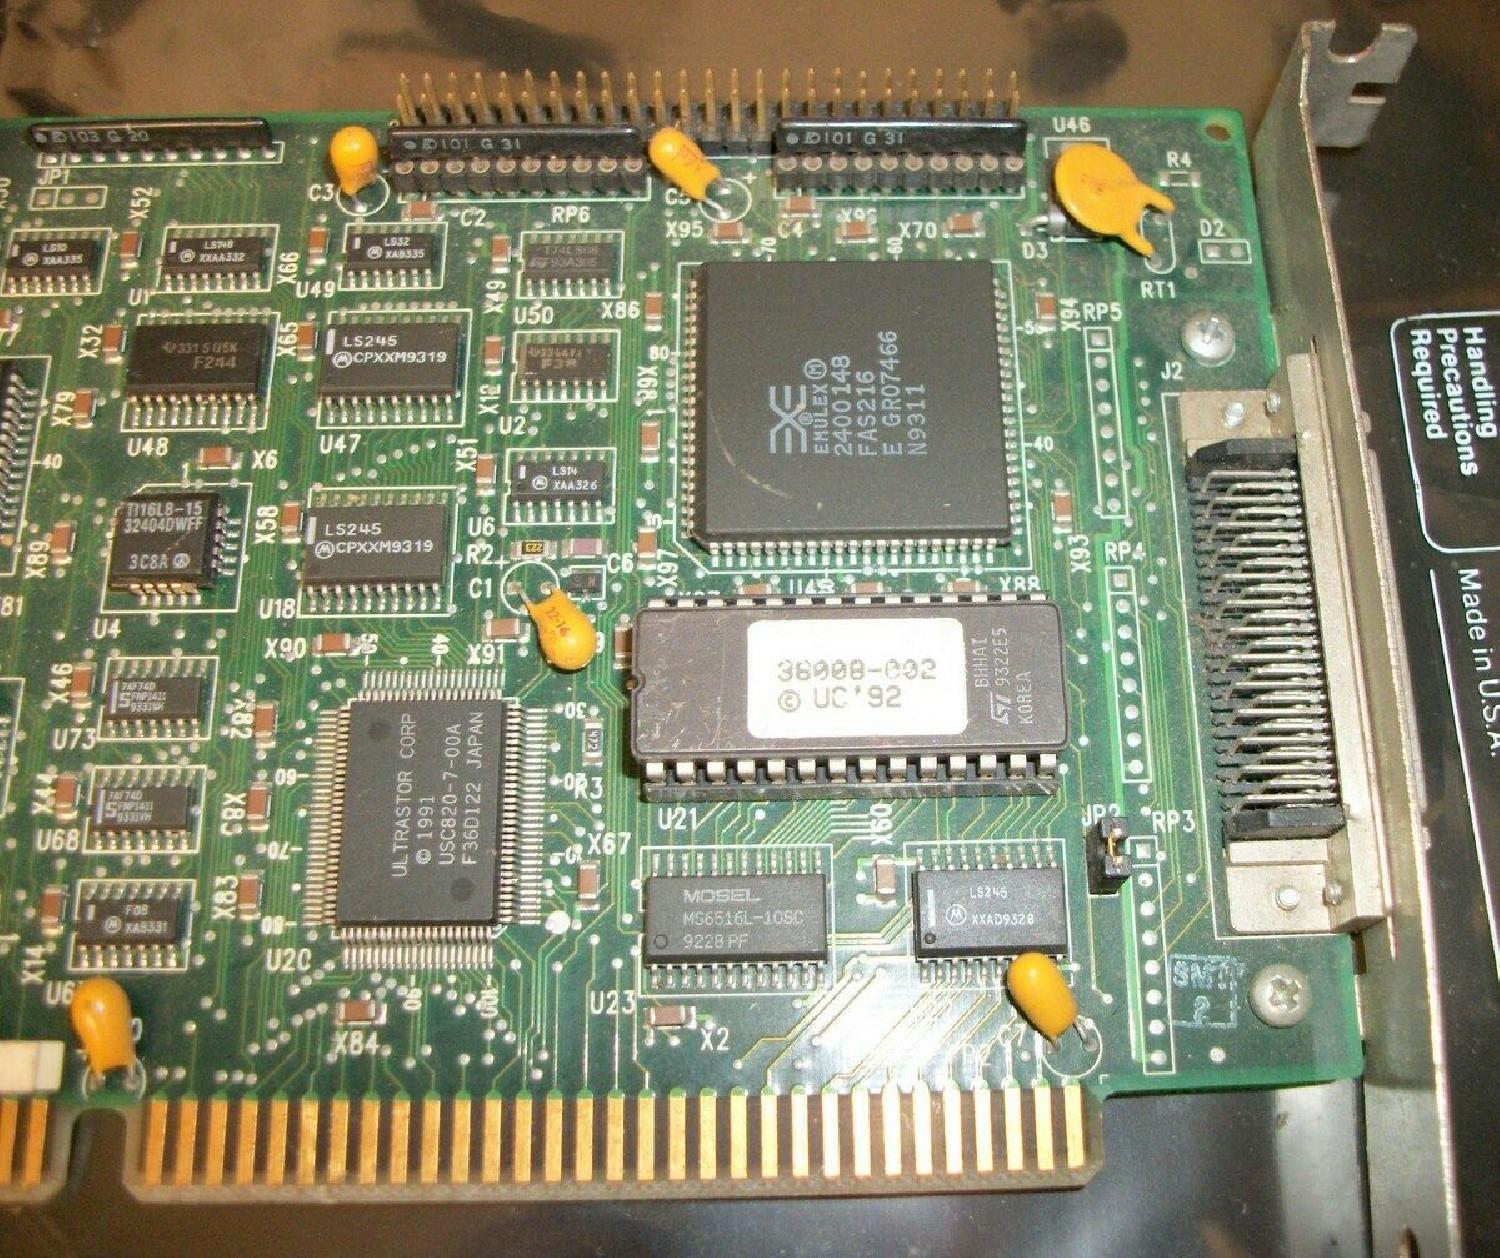 ULTRASTOR U34F VESA LOCAL BUS SCSI CONTROLLER